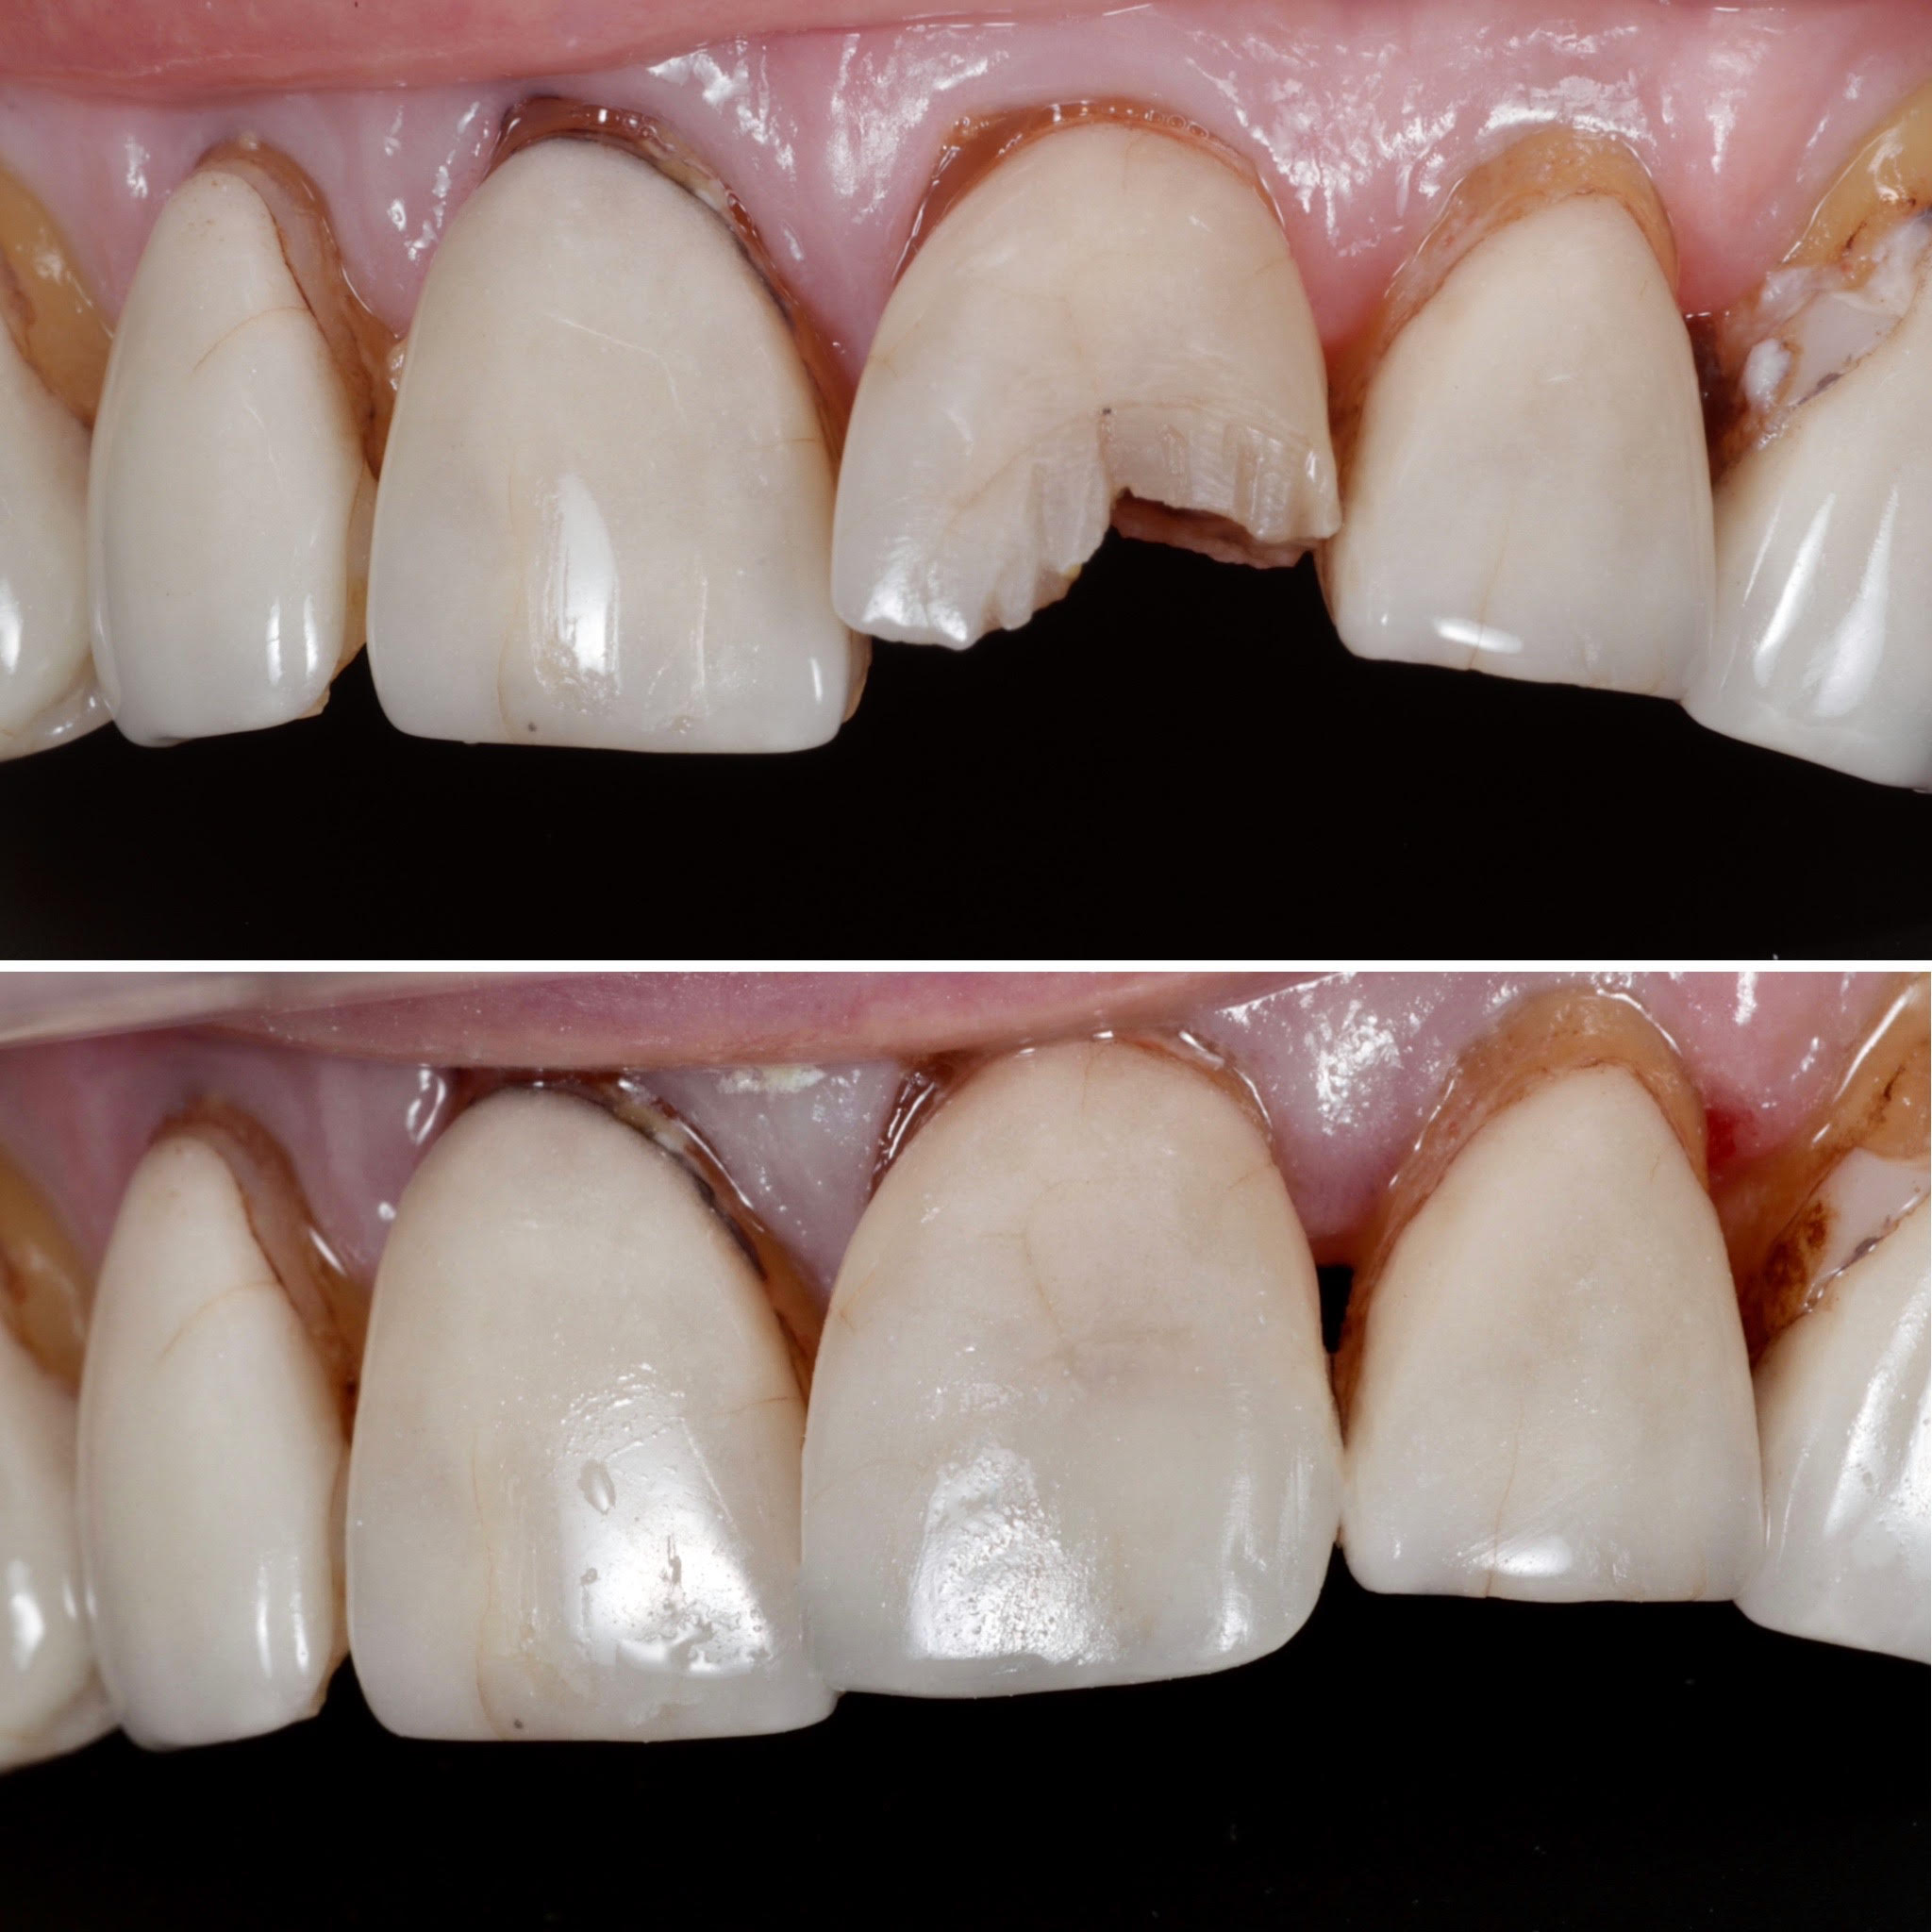 Repairing Teeth with Composite Resin